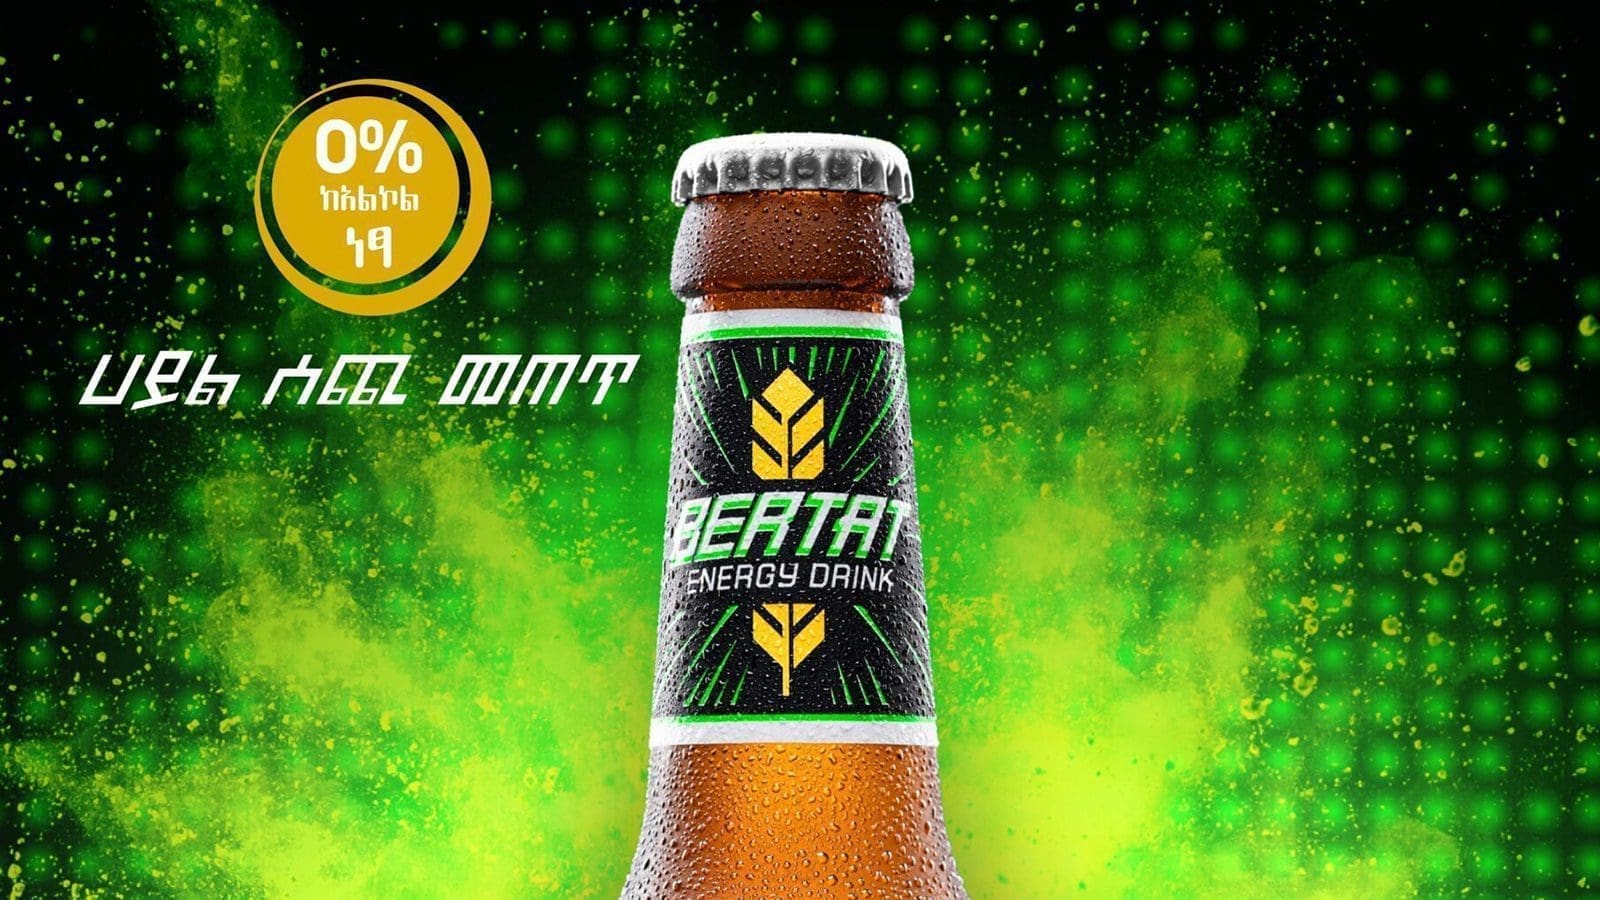 Beverage makers Heineken Ethiopia, Delta Corporation and Kenyan Originals expand product lines